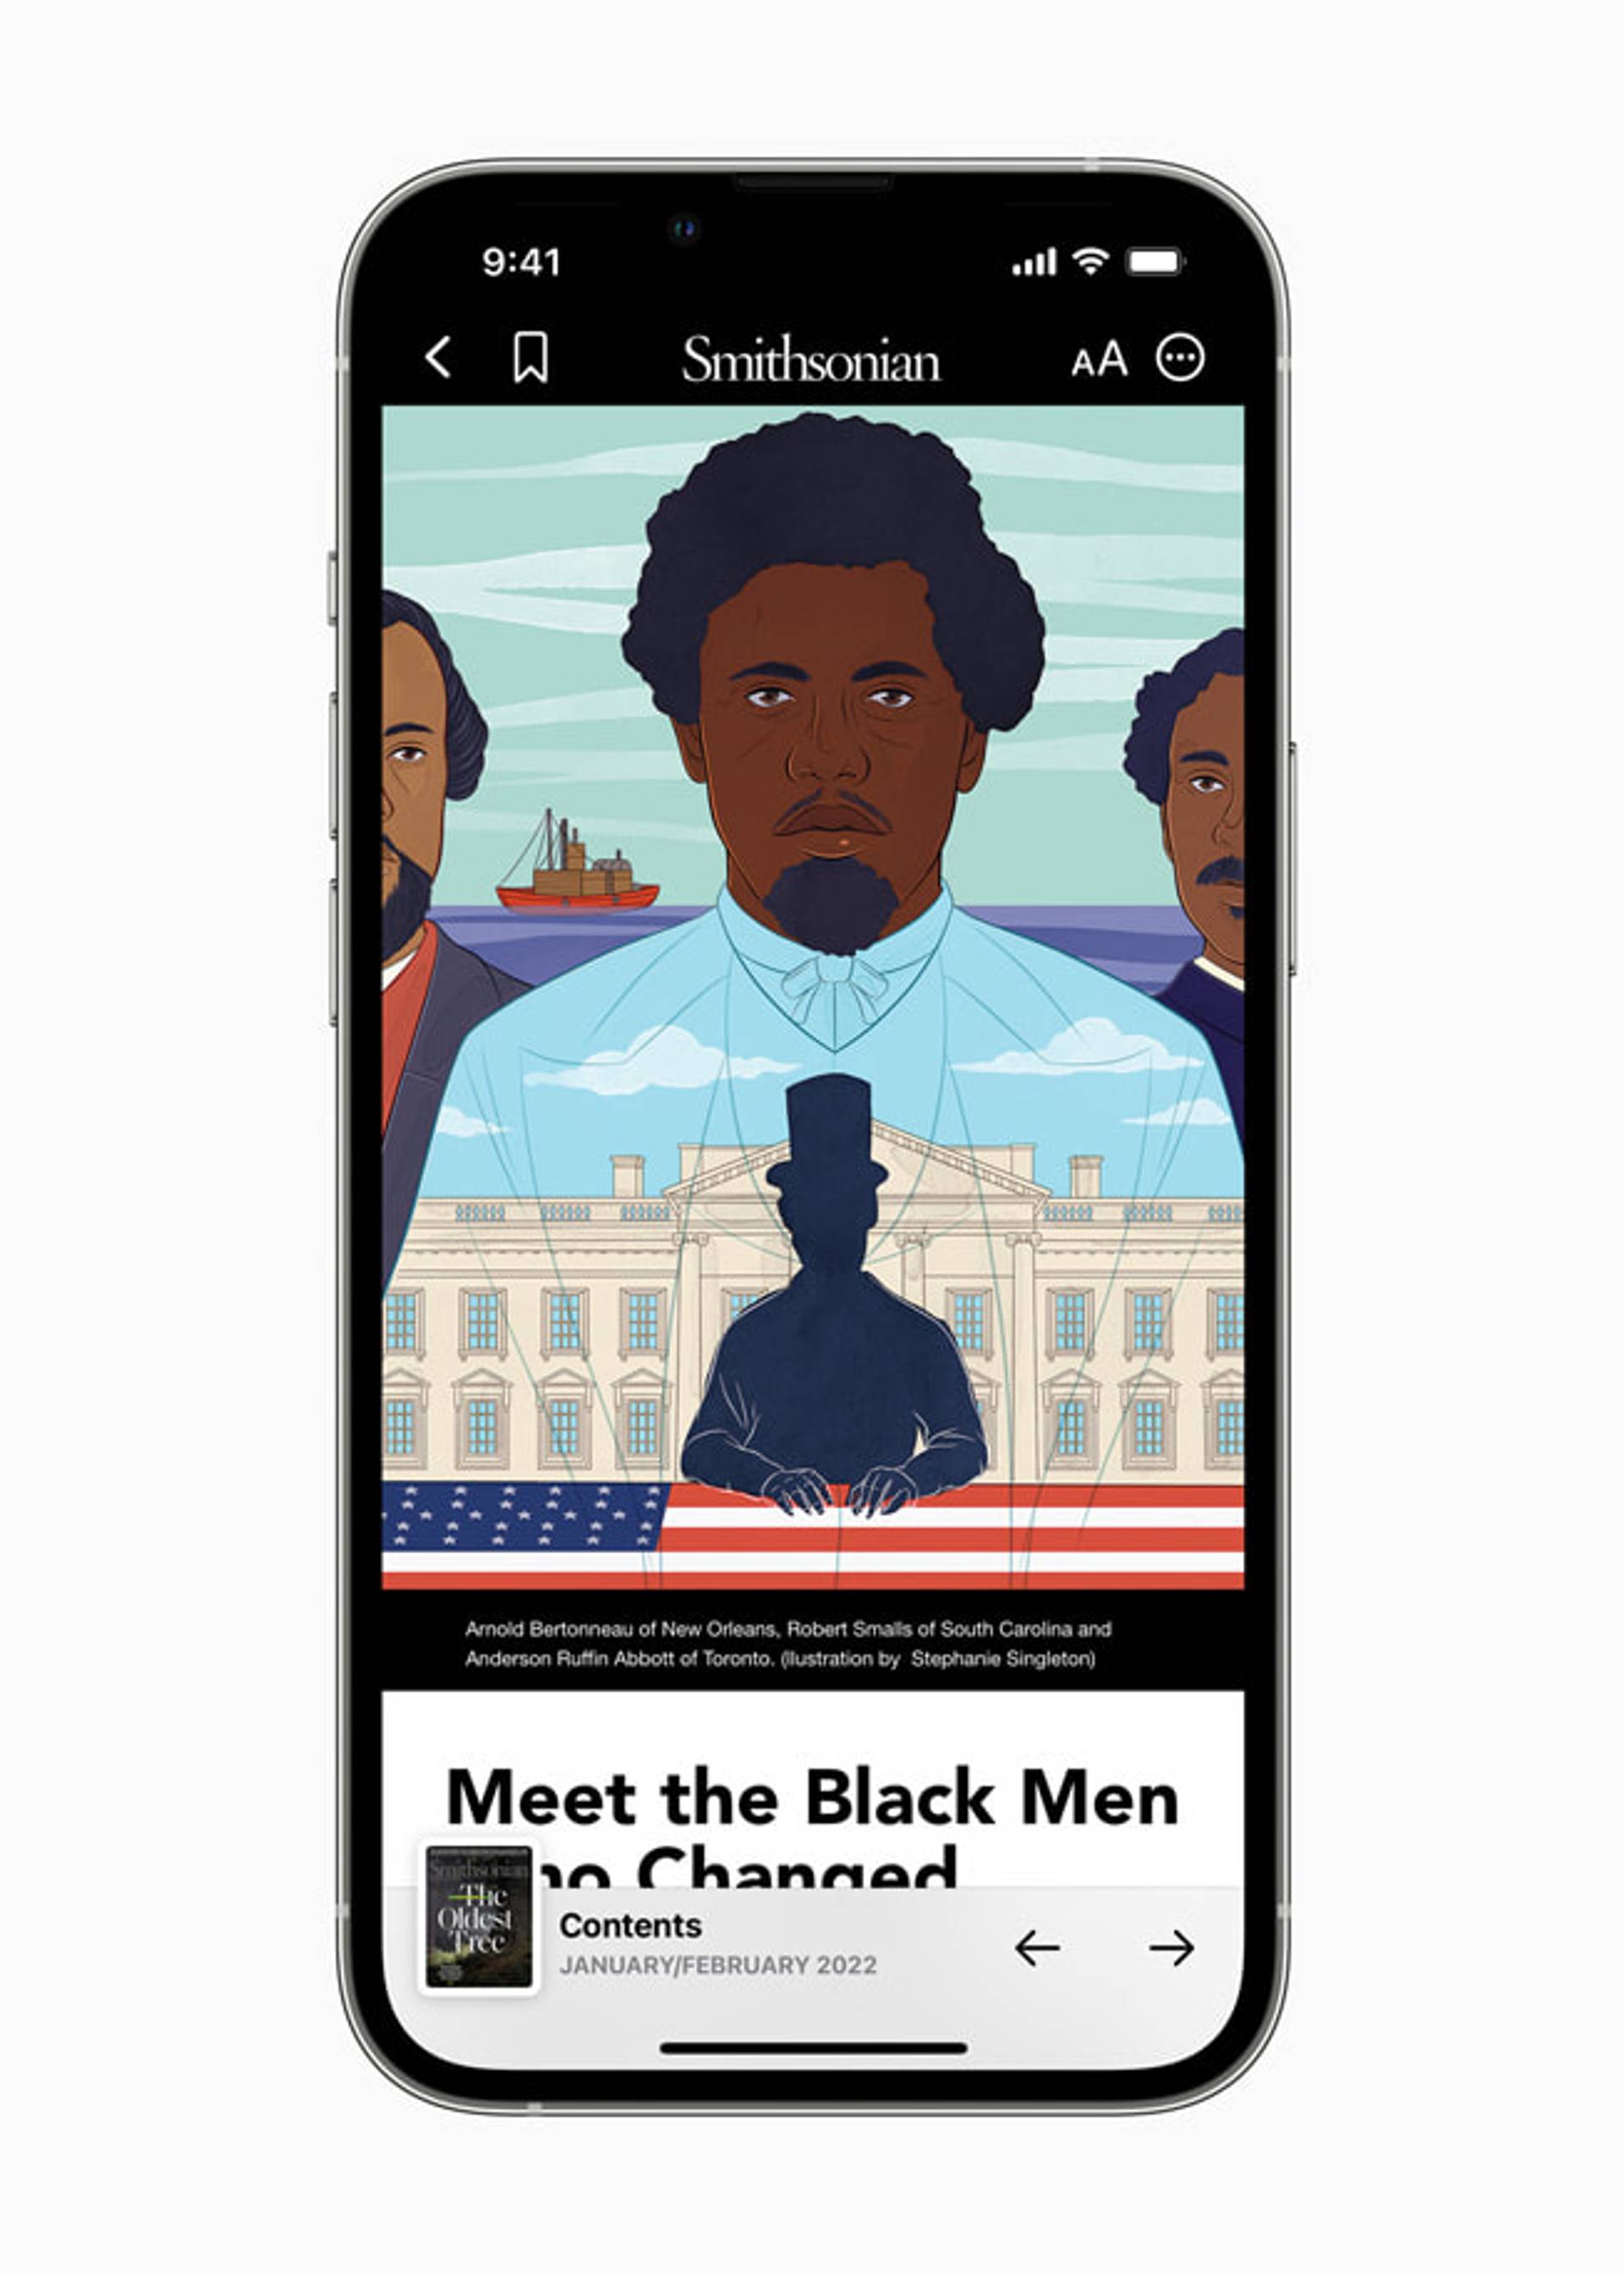 Apple showcases Black diversity in content push